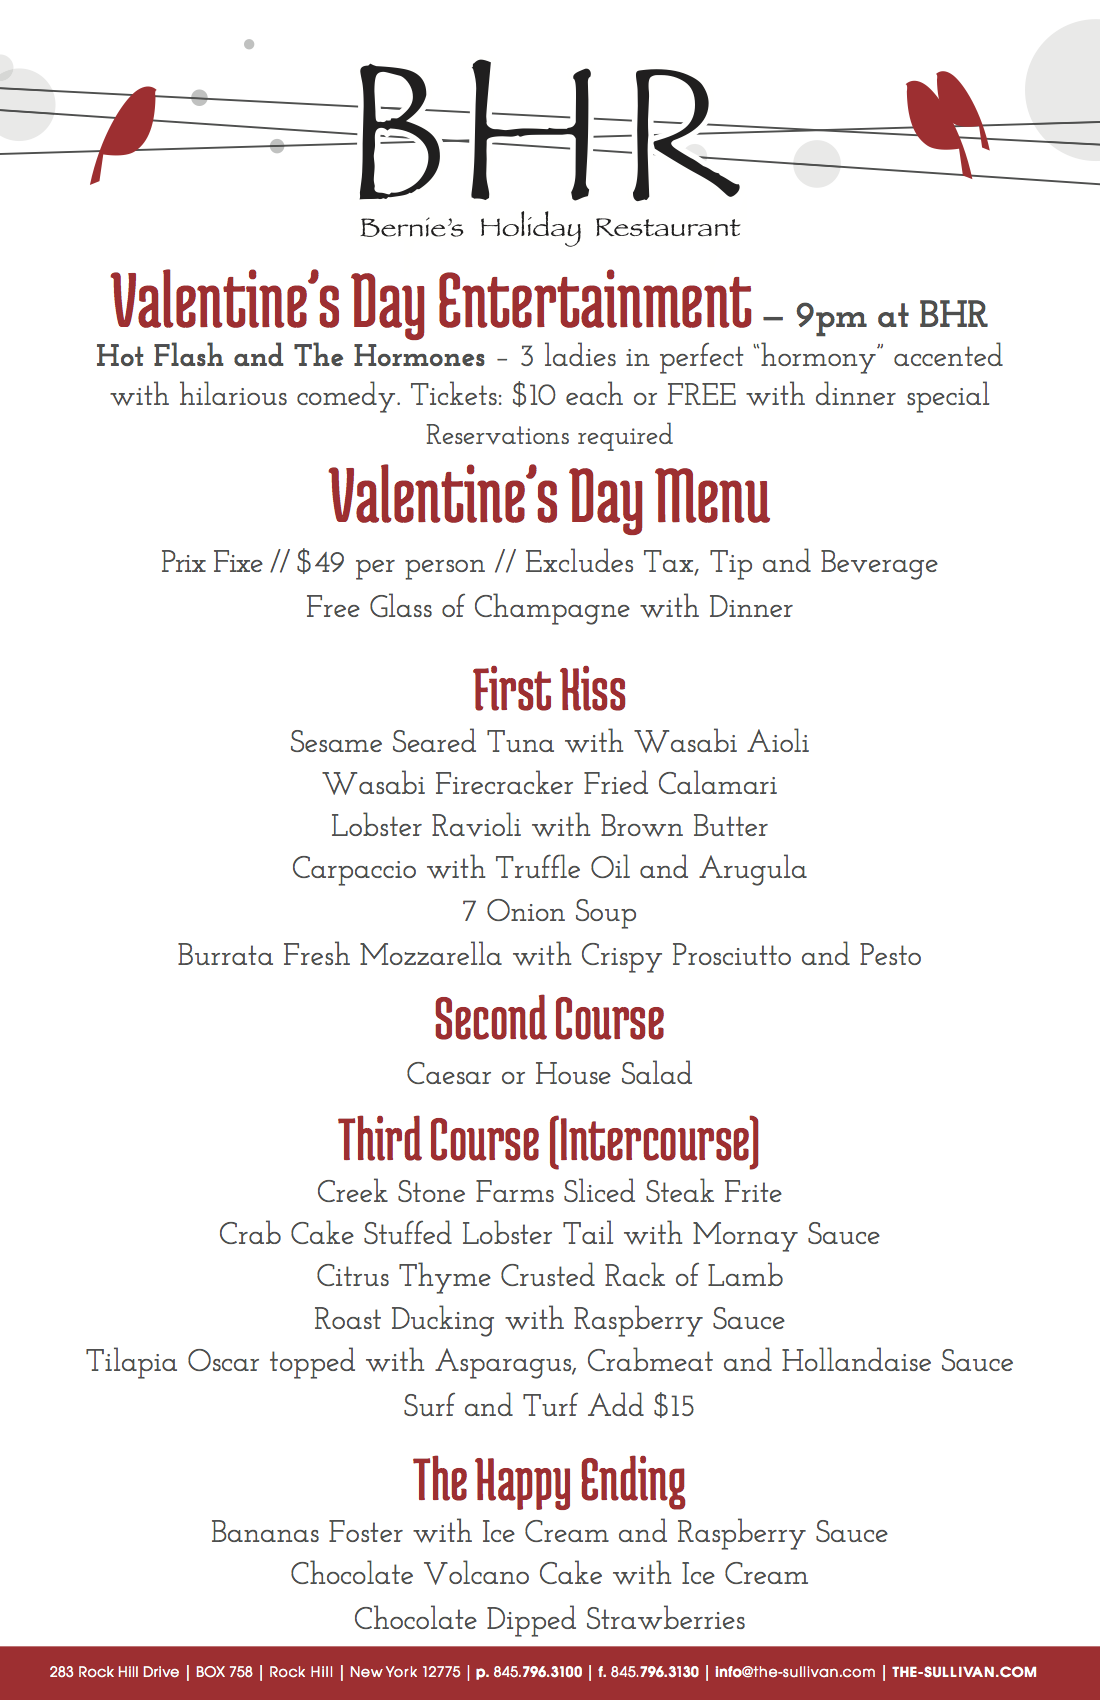 Valentine's Day Dinner @ Bernie's Holiday Restaurant | Rock Hill | New York | United States